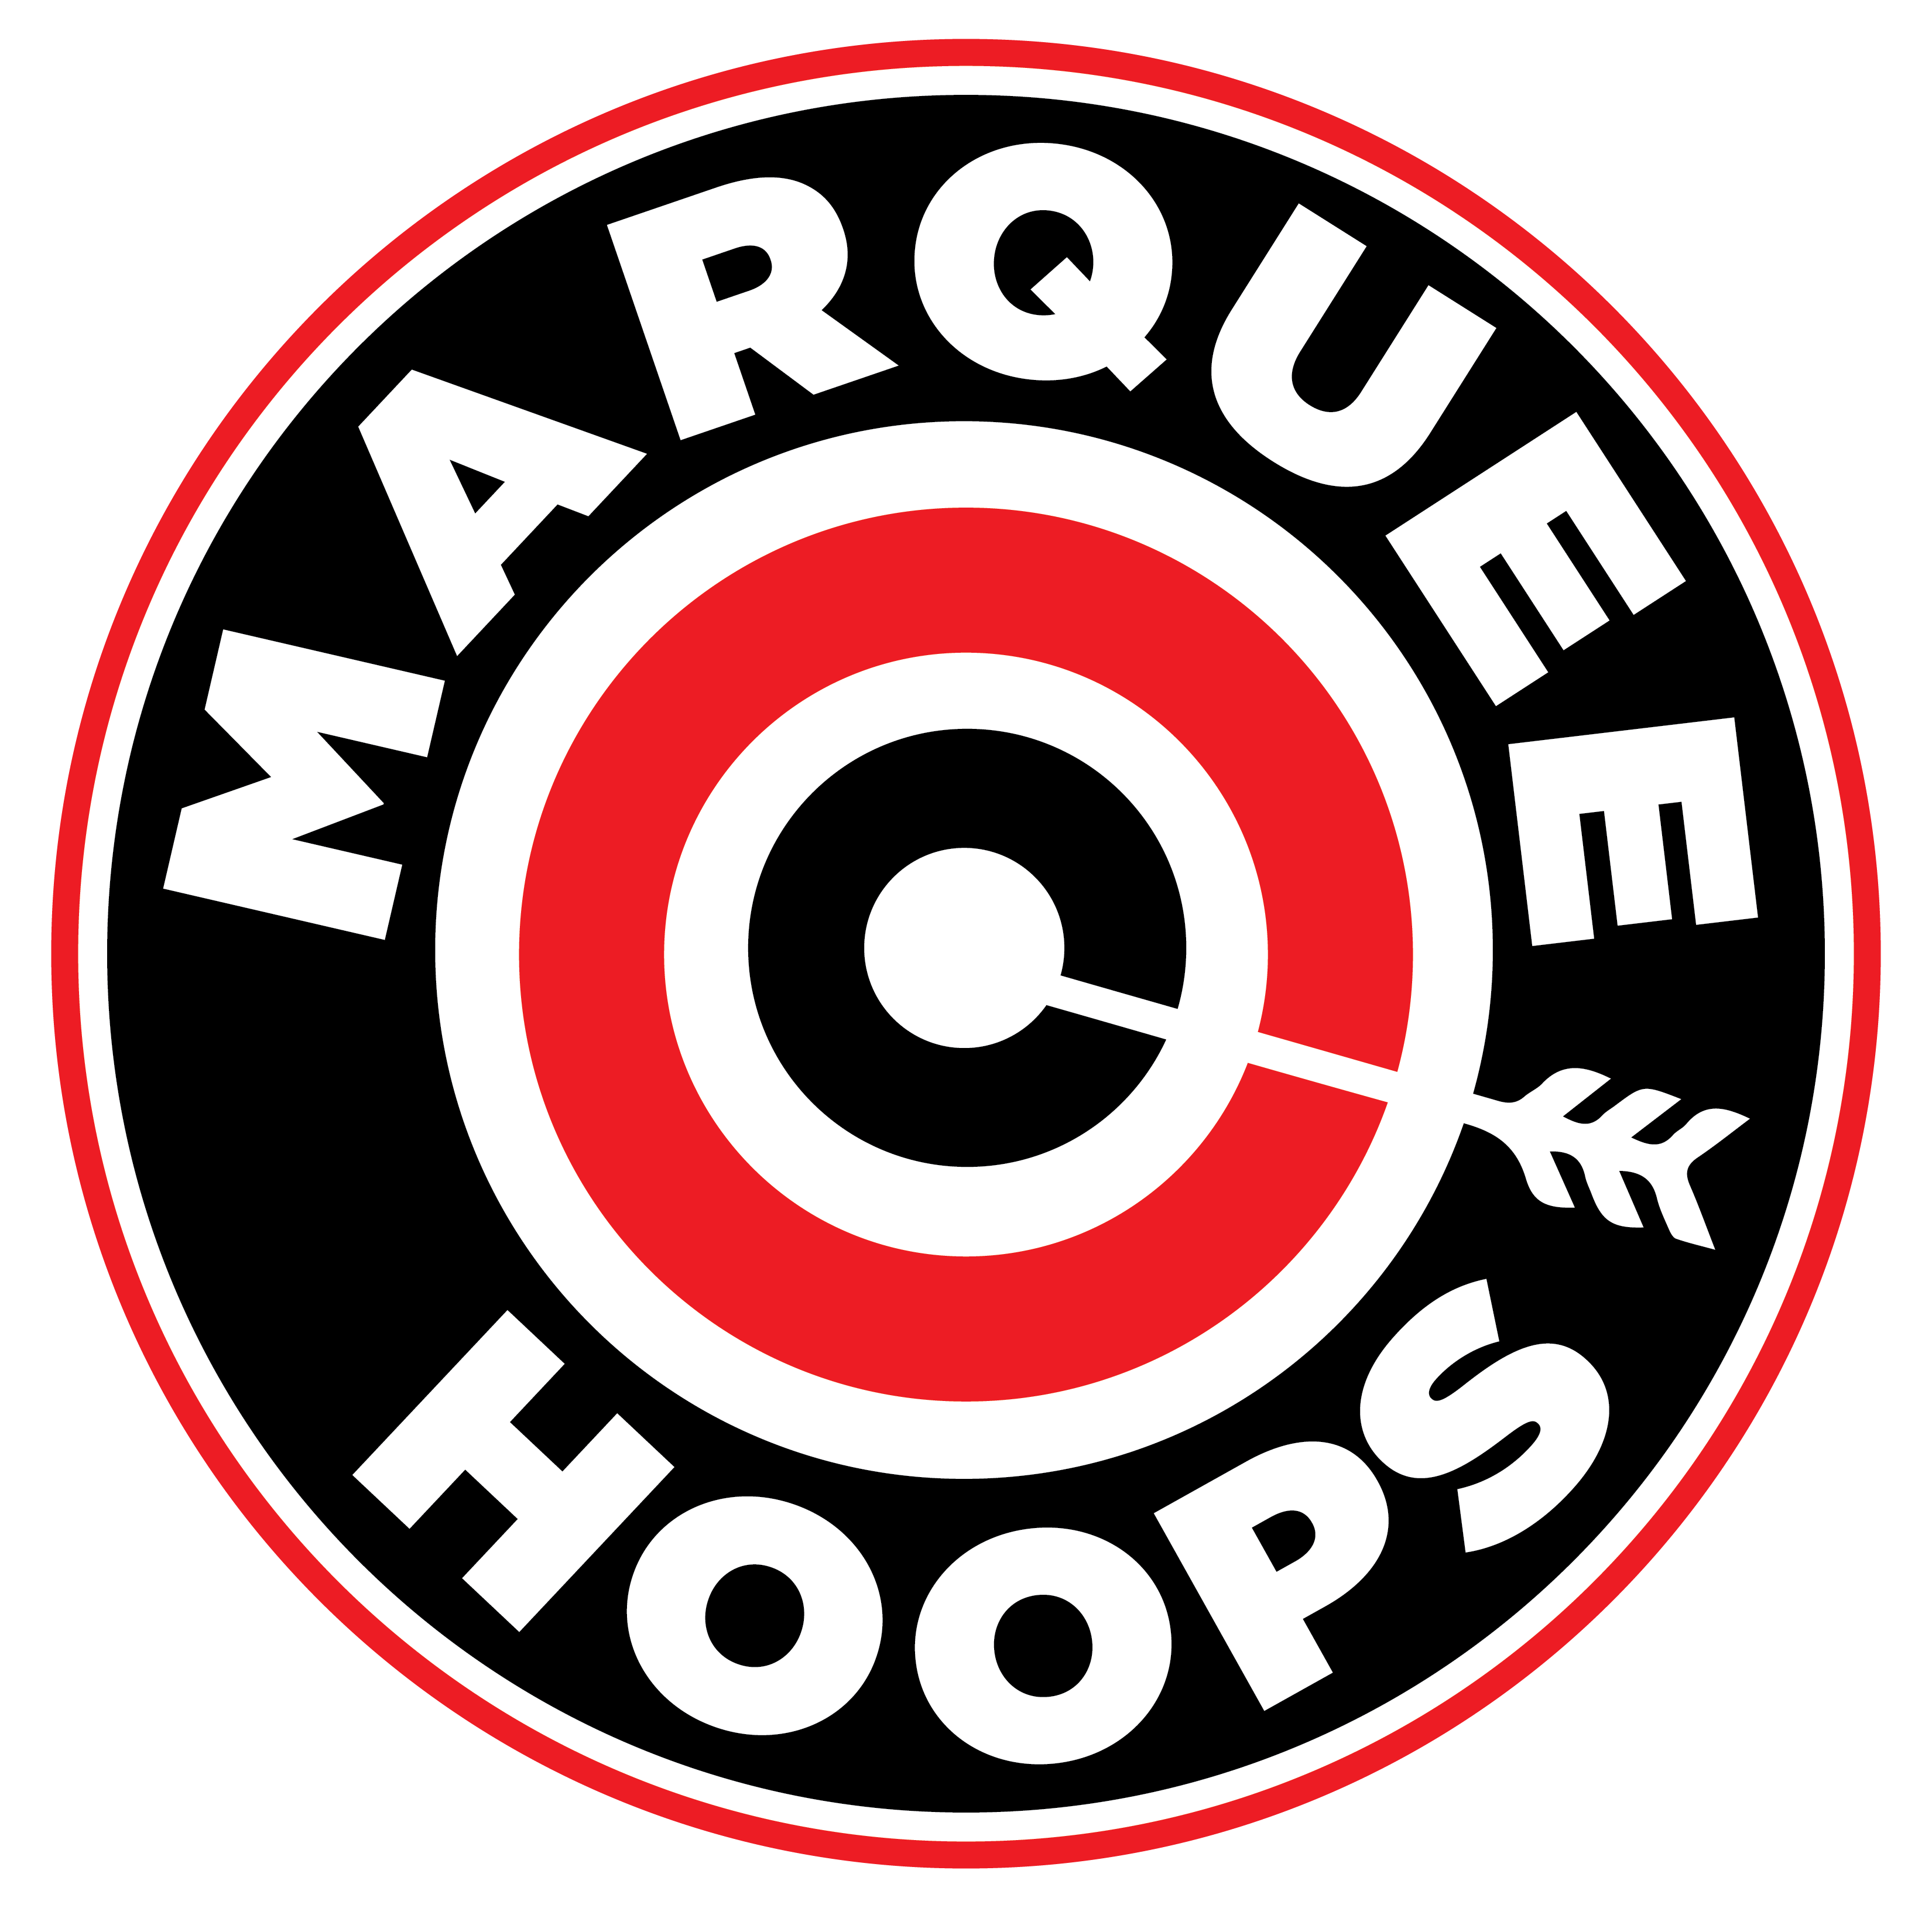 Marquee Hoops